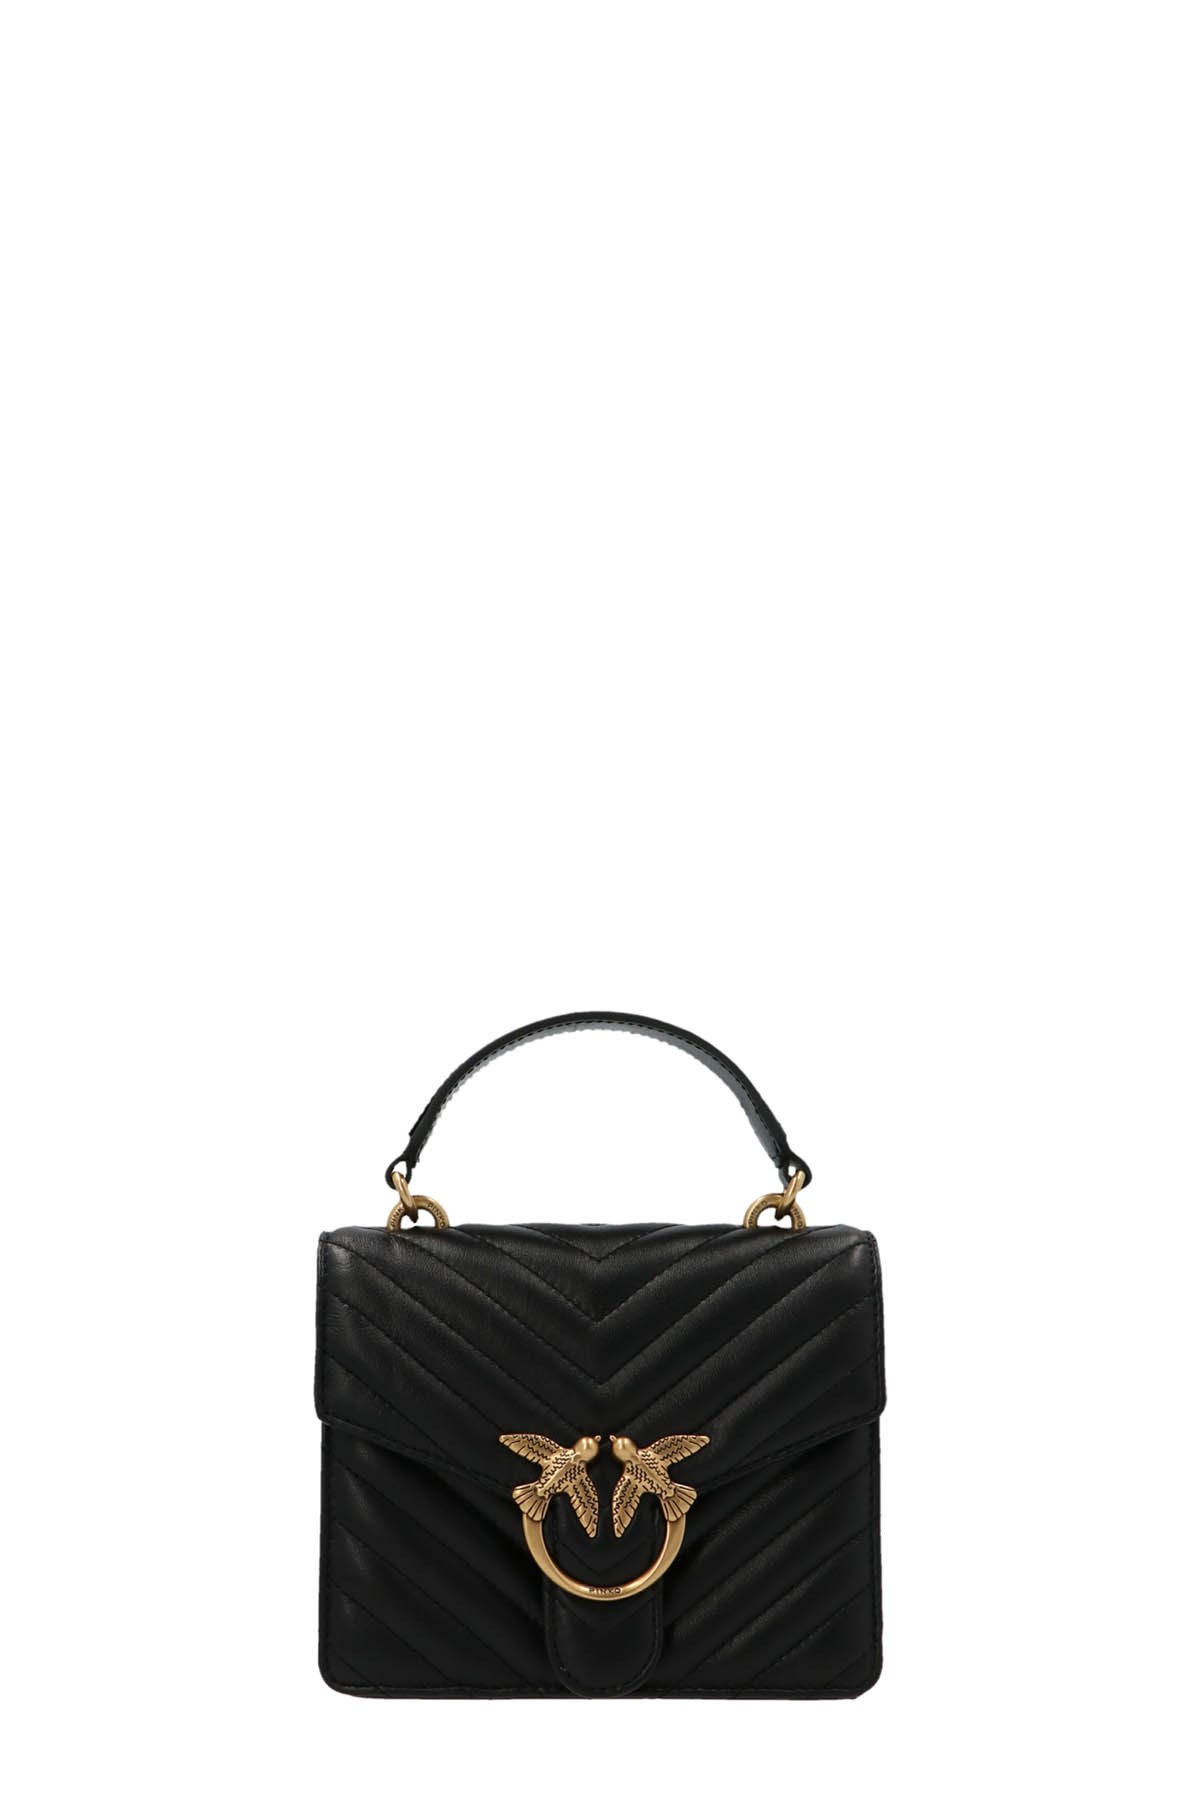 PINKO 'Love Top Handle Simply Quilt’ Handbag